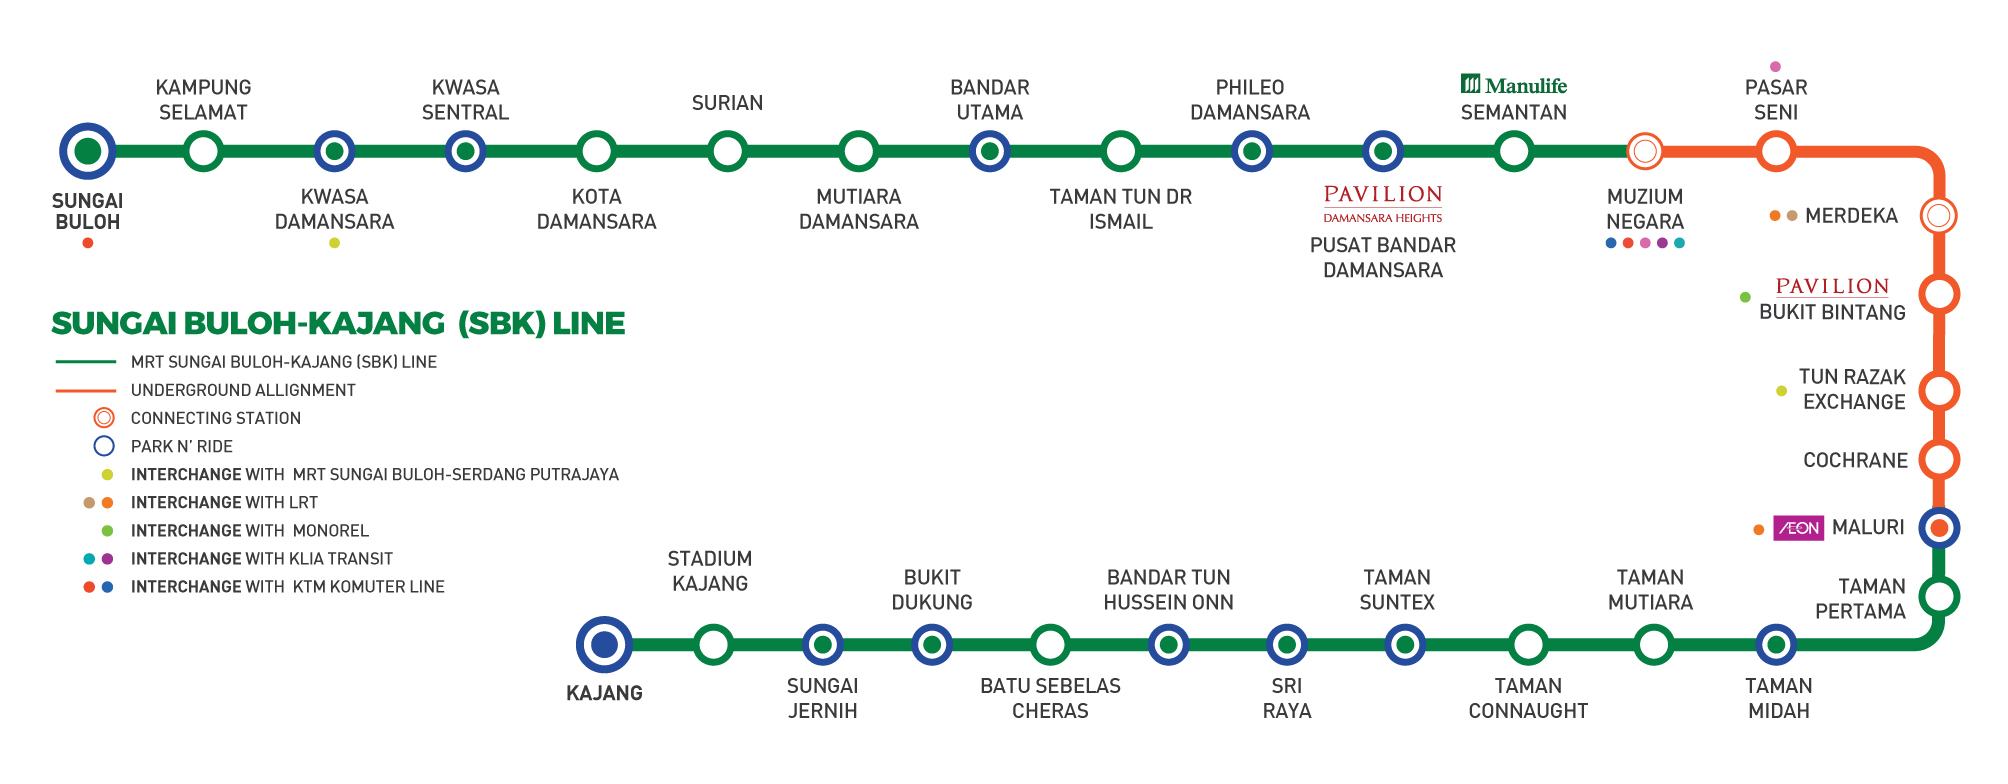 MRT Kajang Line, 51km MRT line with 31 stations from Kwasa Damansara to